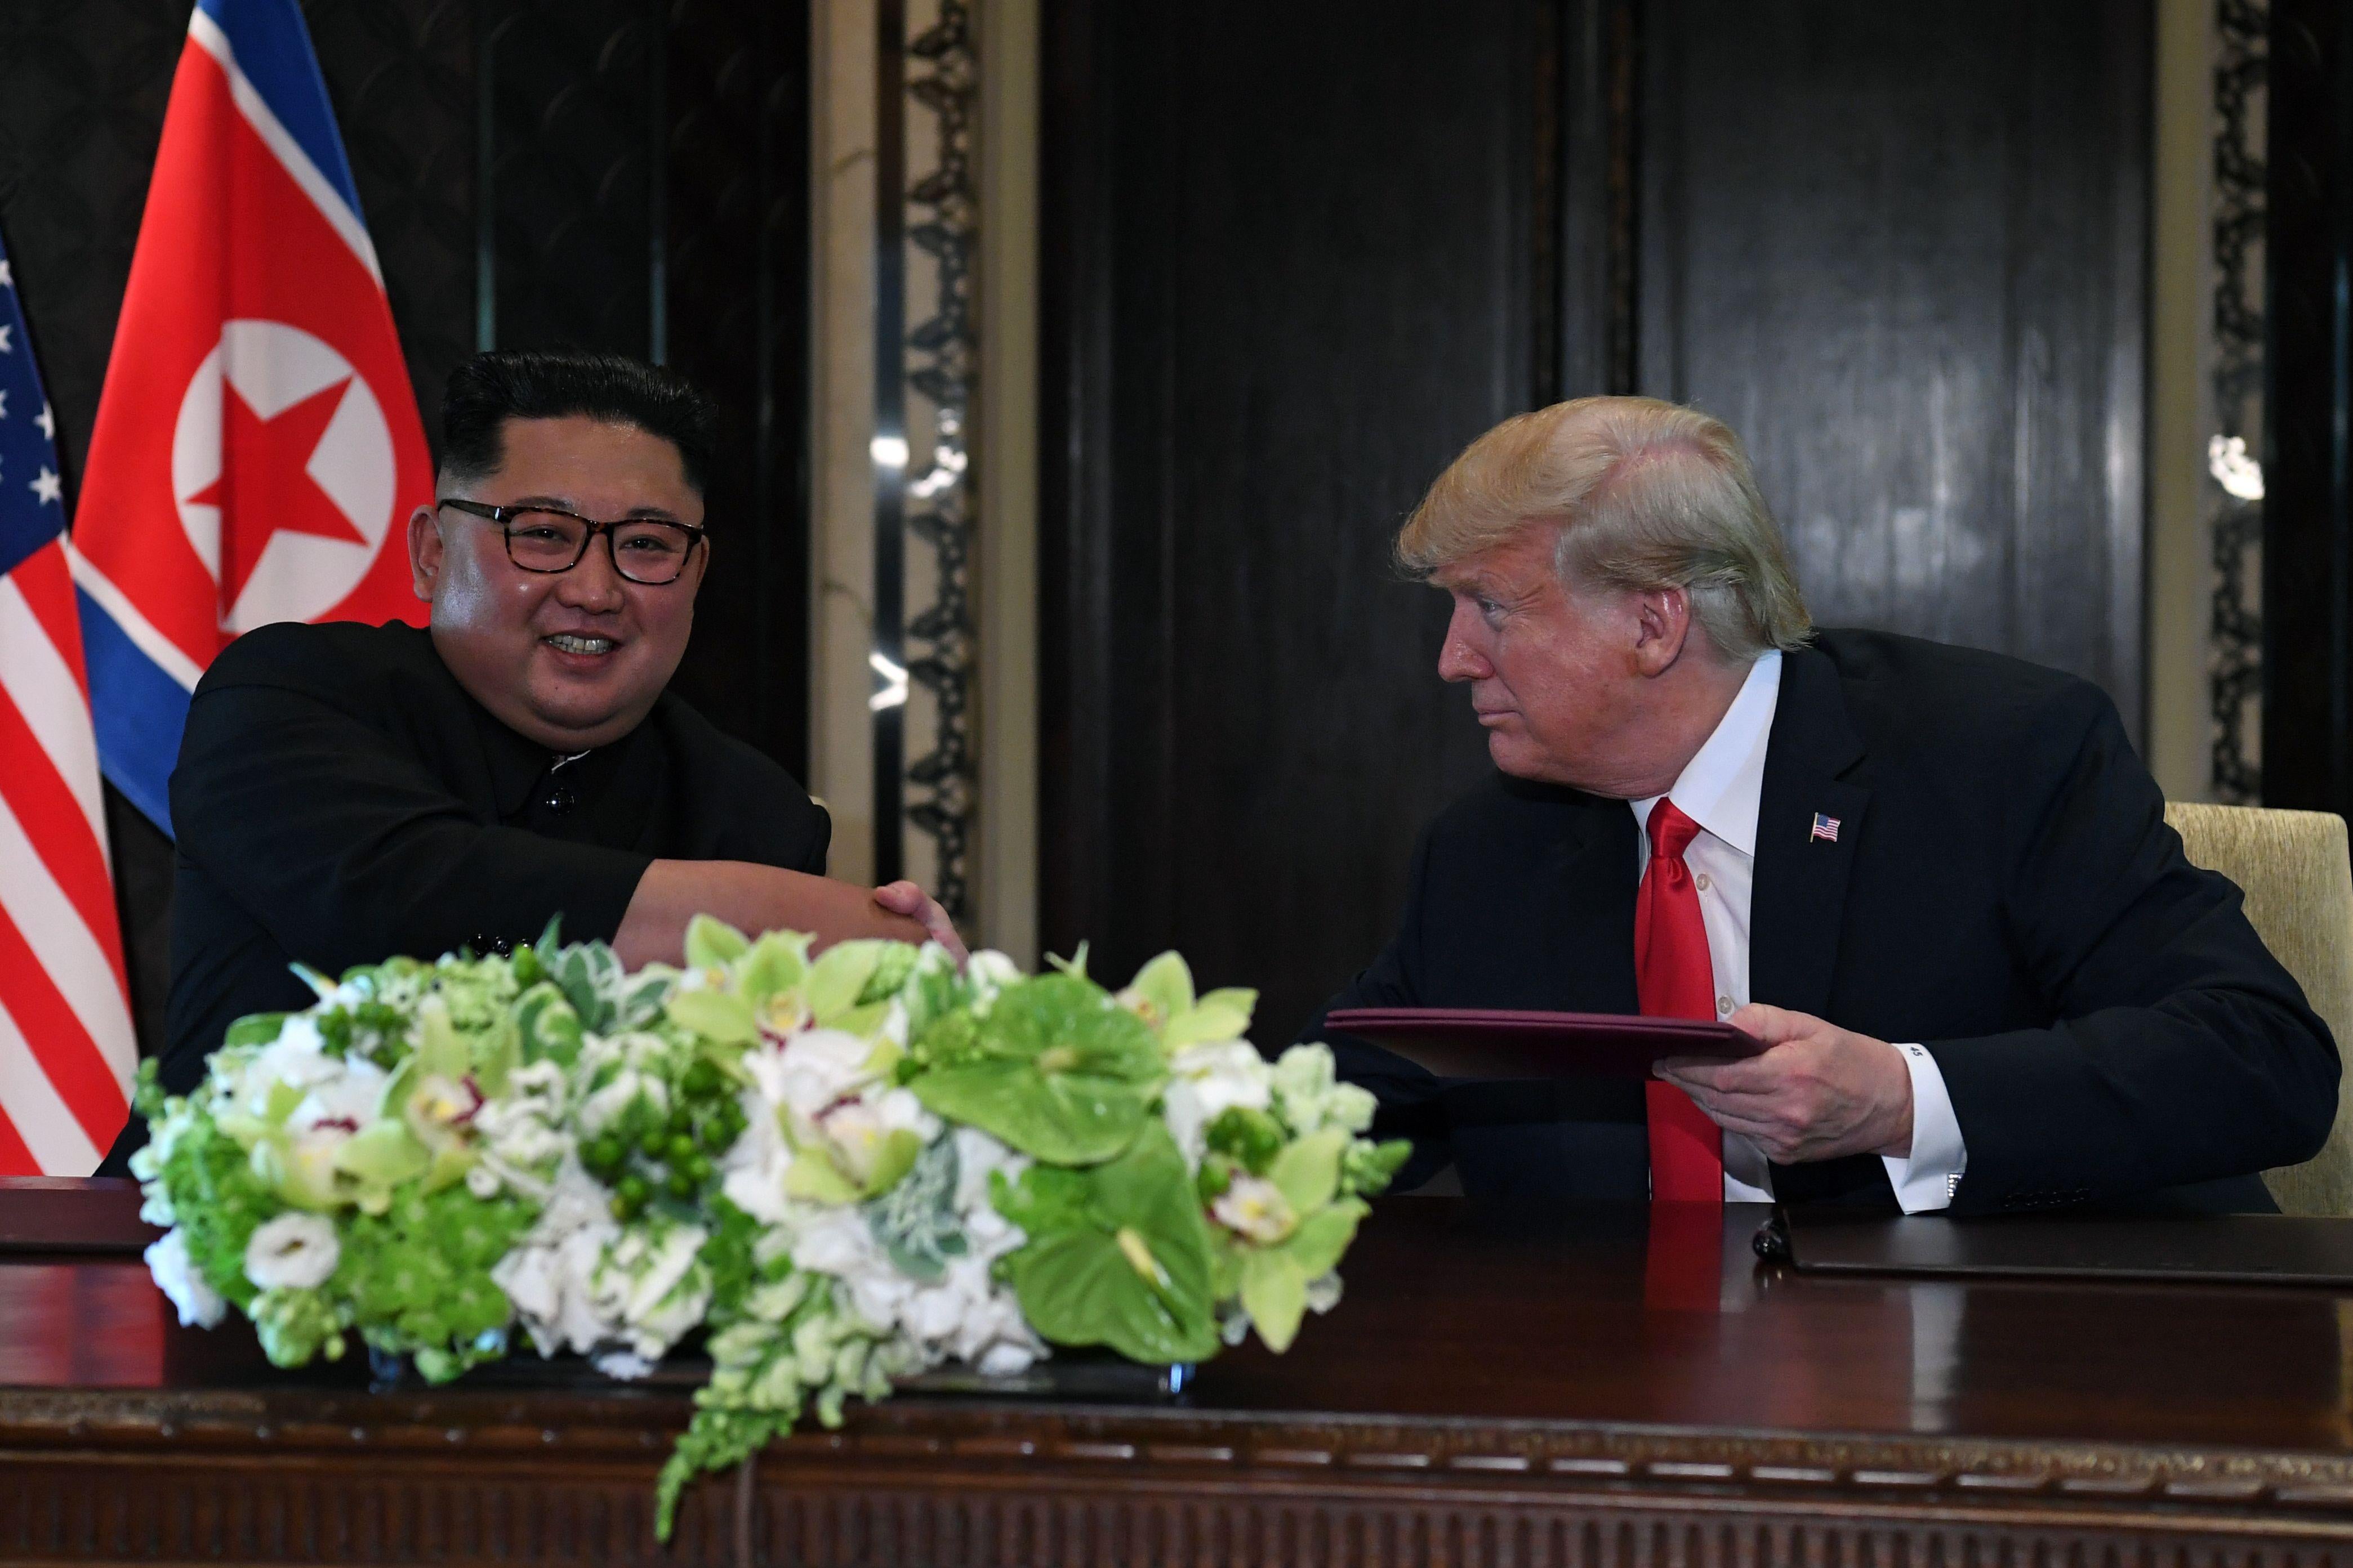 Kim Jong-un shakes hands with Donald Trump